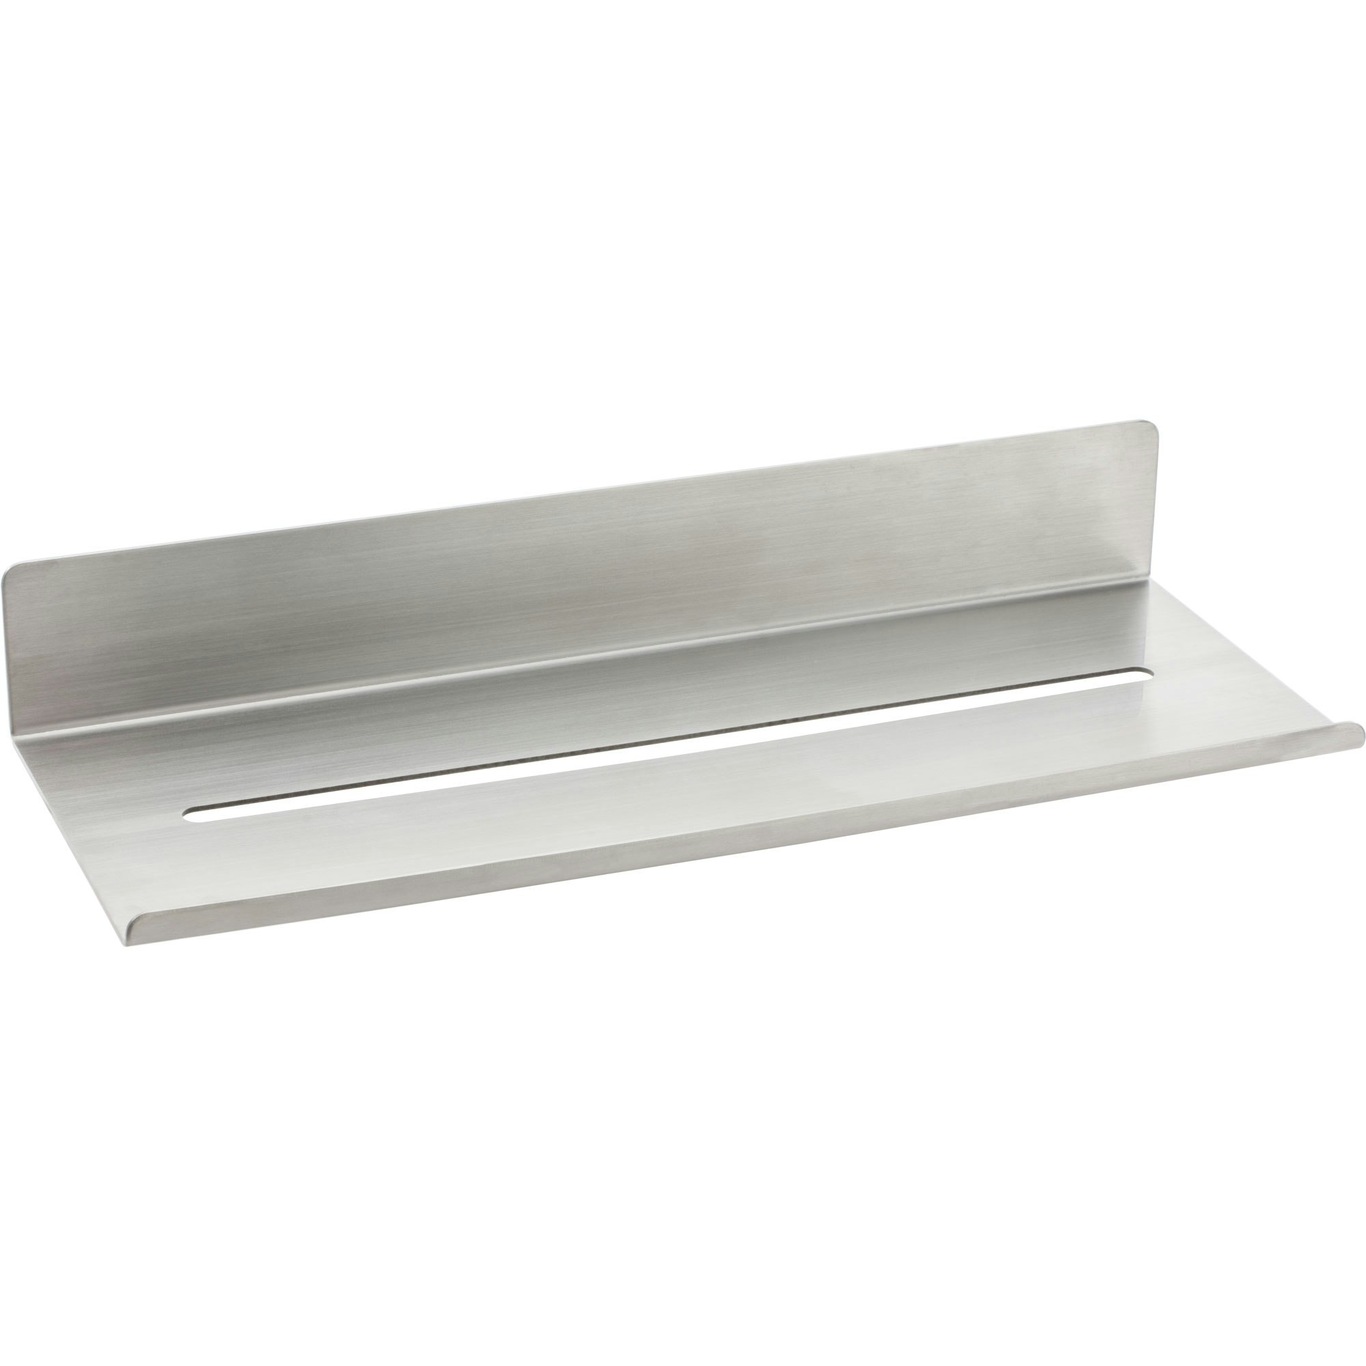 Base Shelf, Matte Brushed Stainless steel